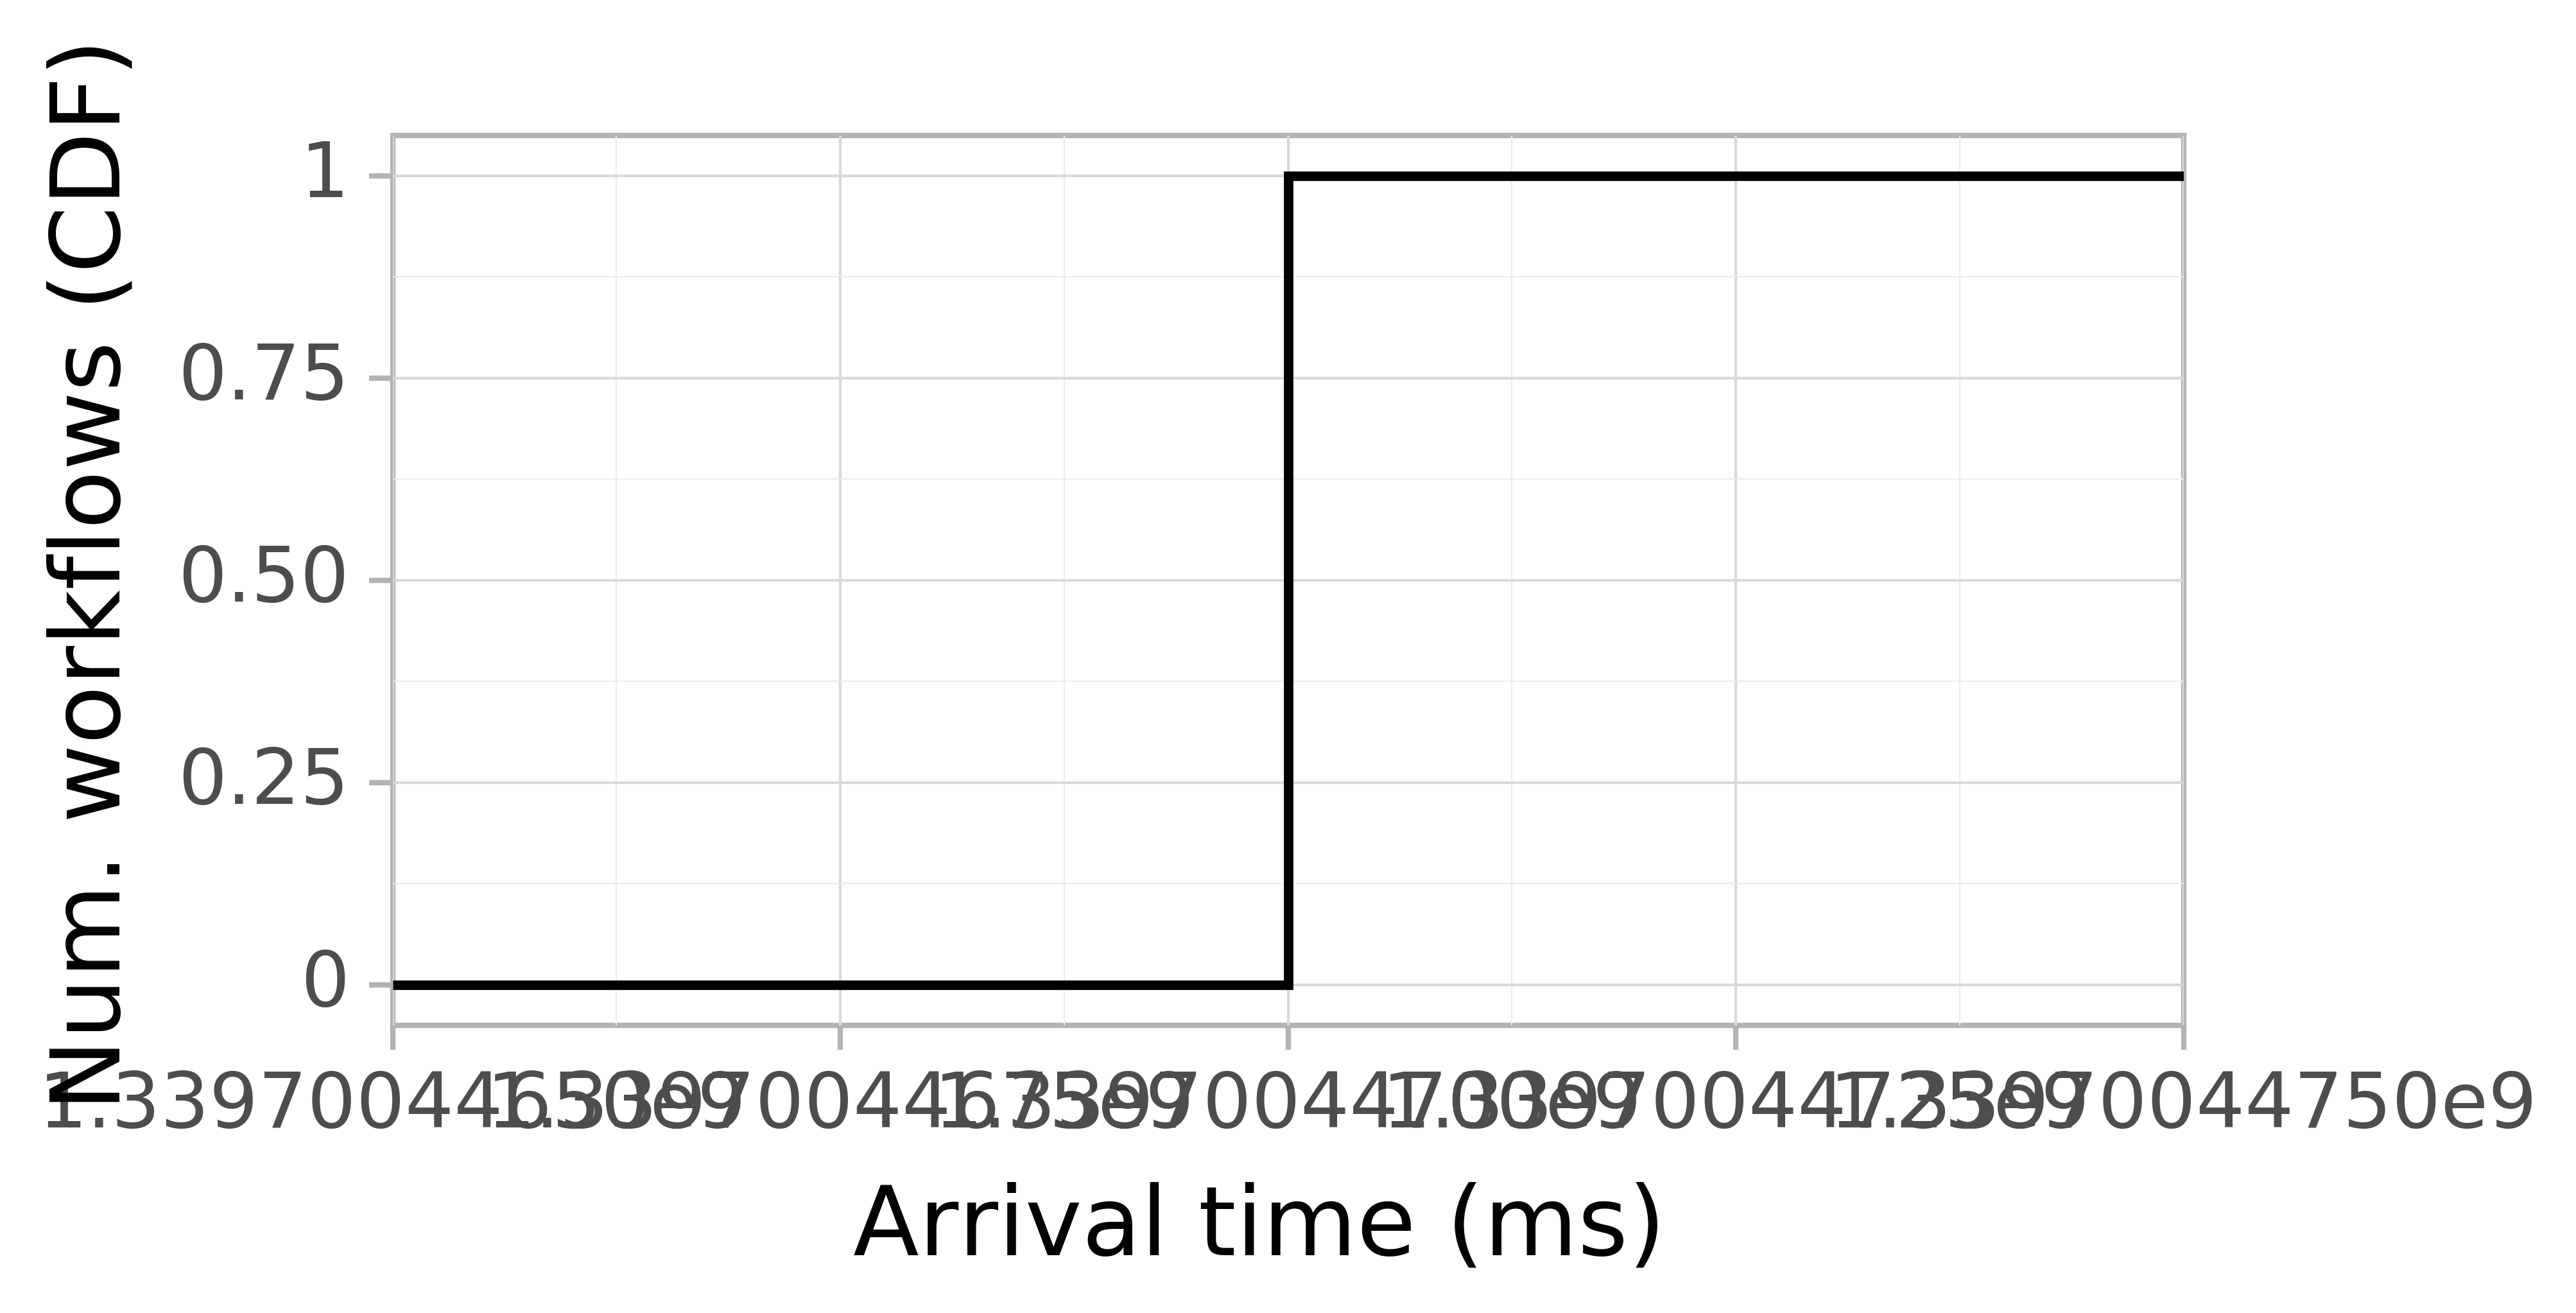 Job arrival CDF graph for the Pegasus_P8 trace.